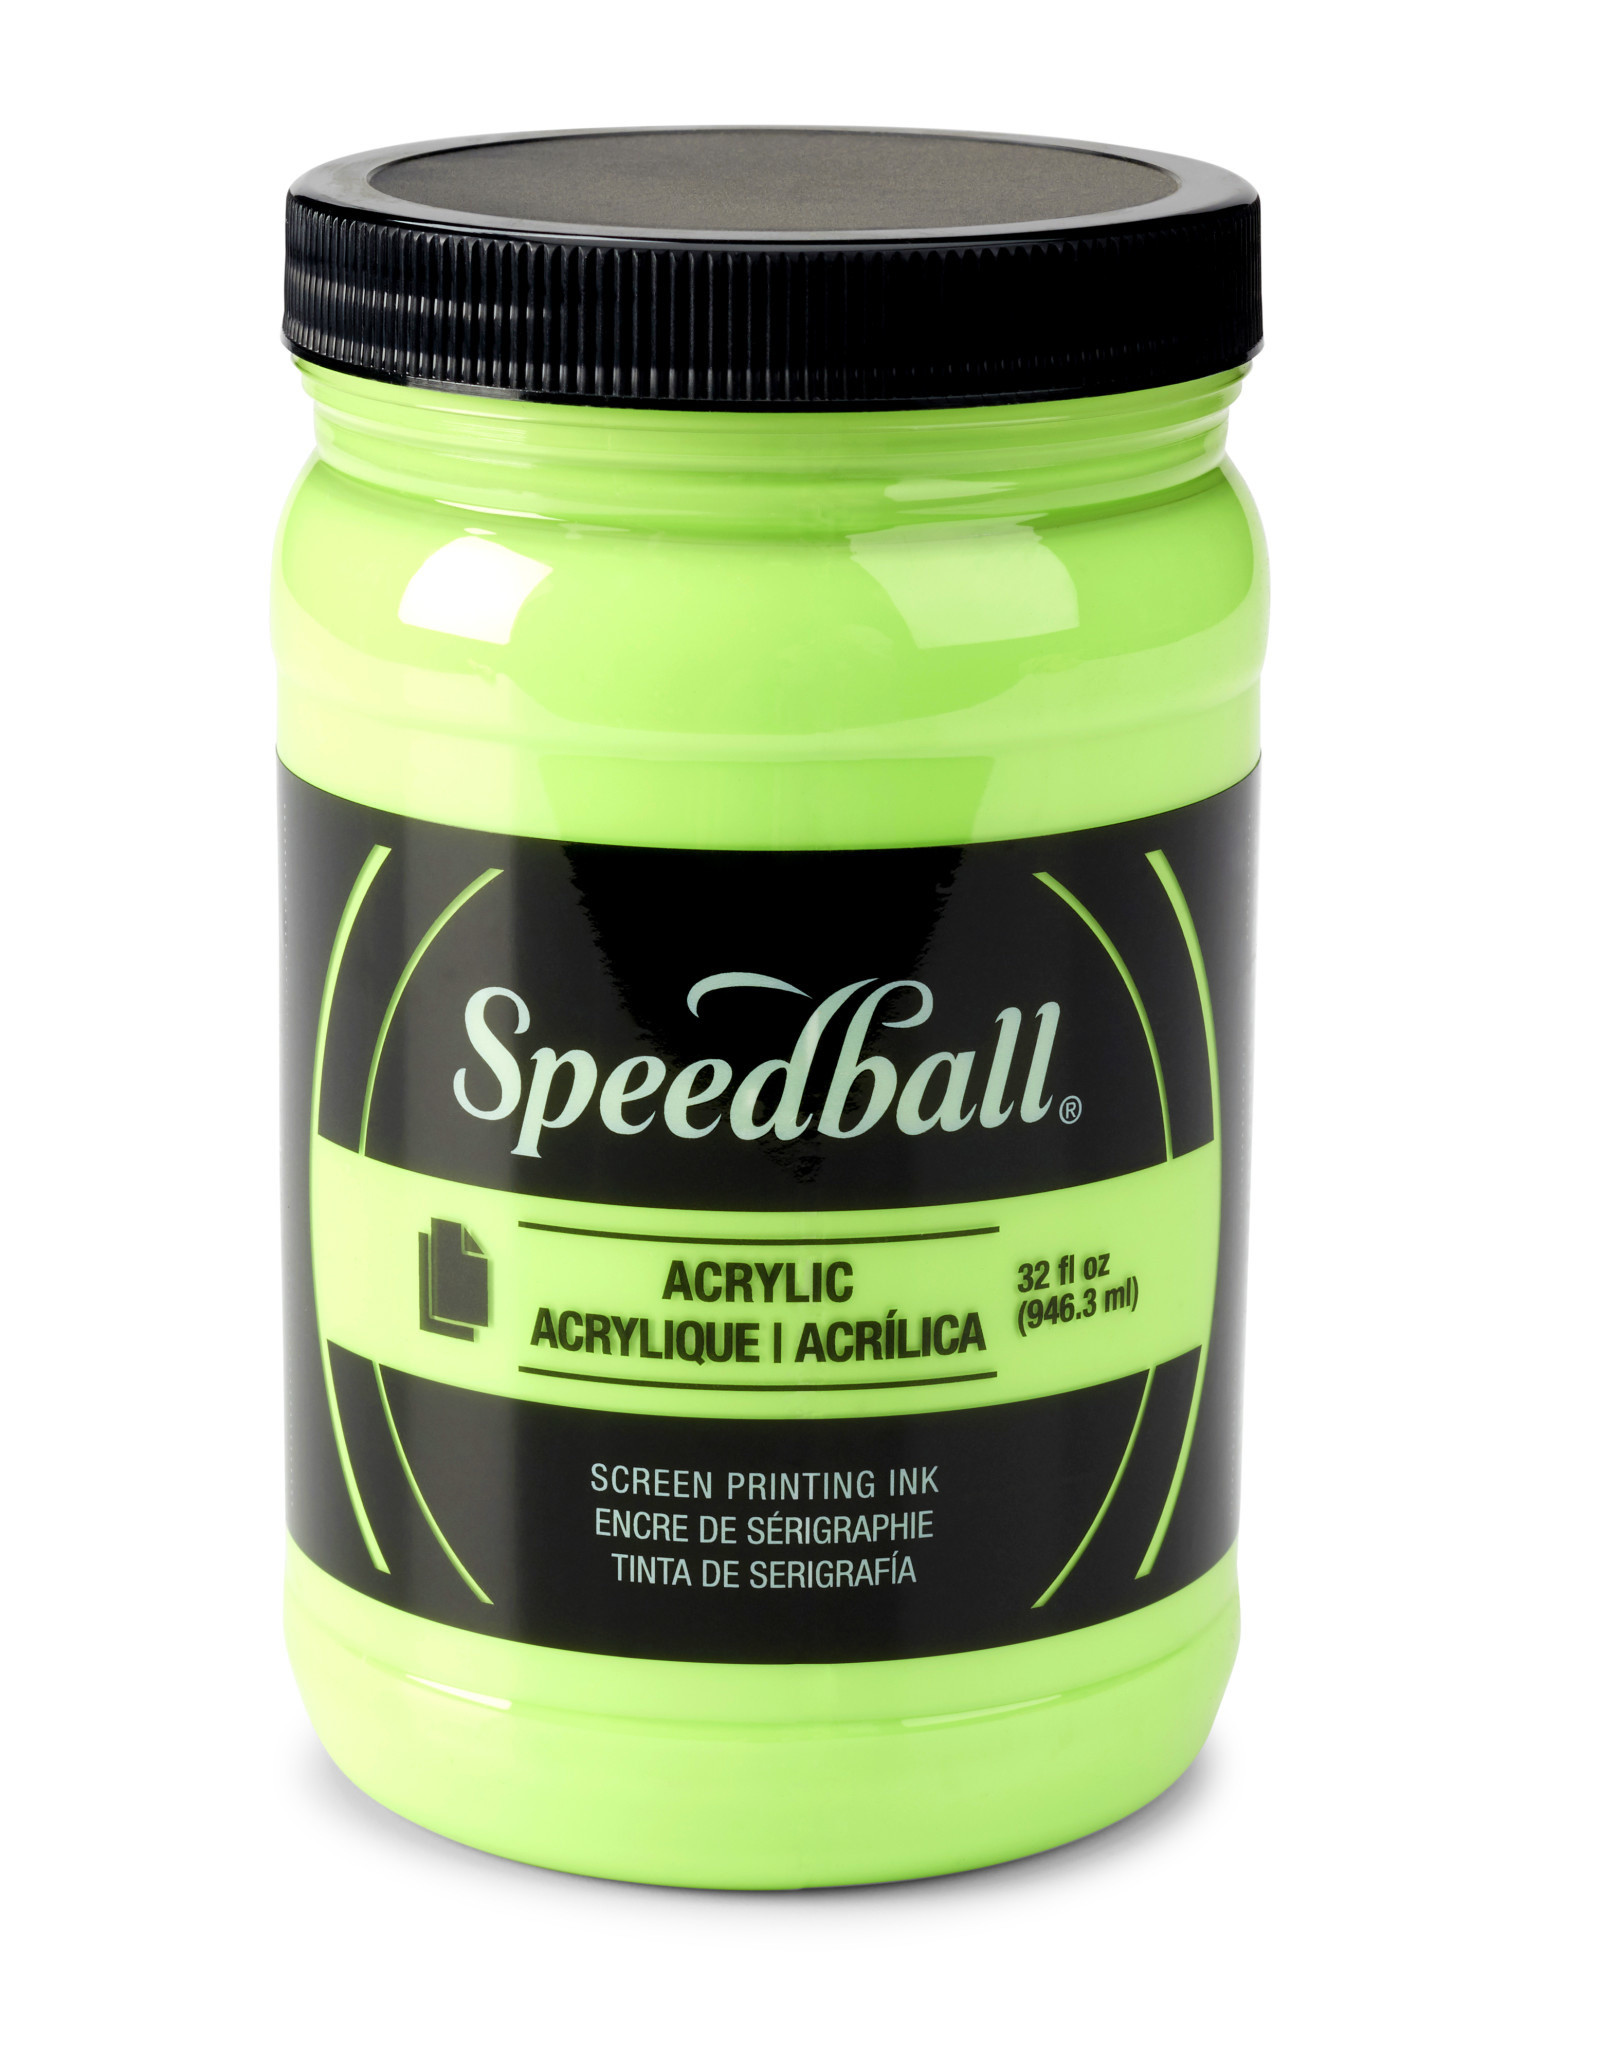 SPEEDBALL ART PRODUCTS Speedball Acrylic Screen Printing Ink, Fluorescent Lime Green, 32oz